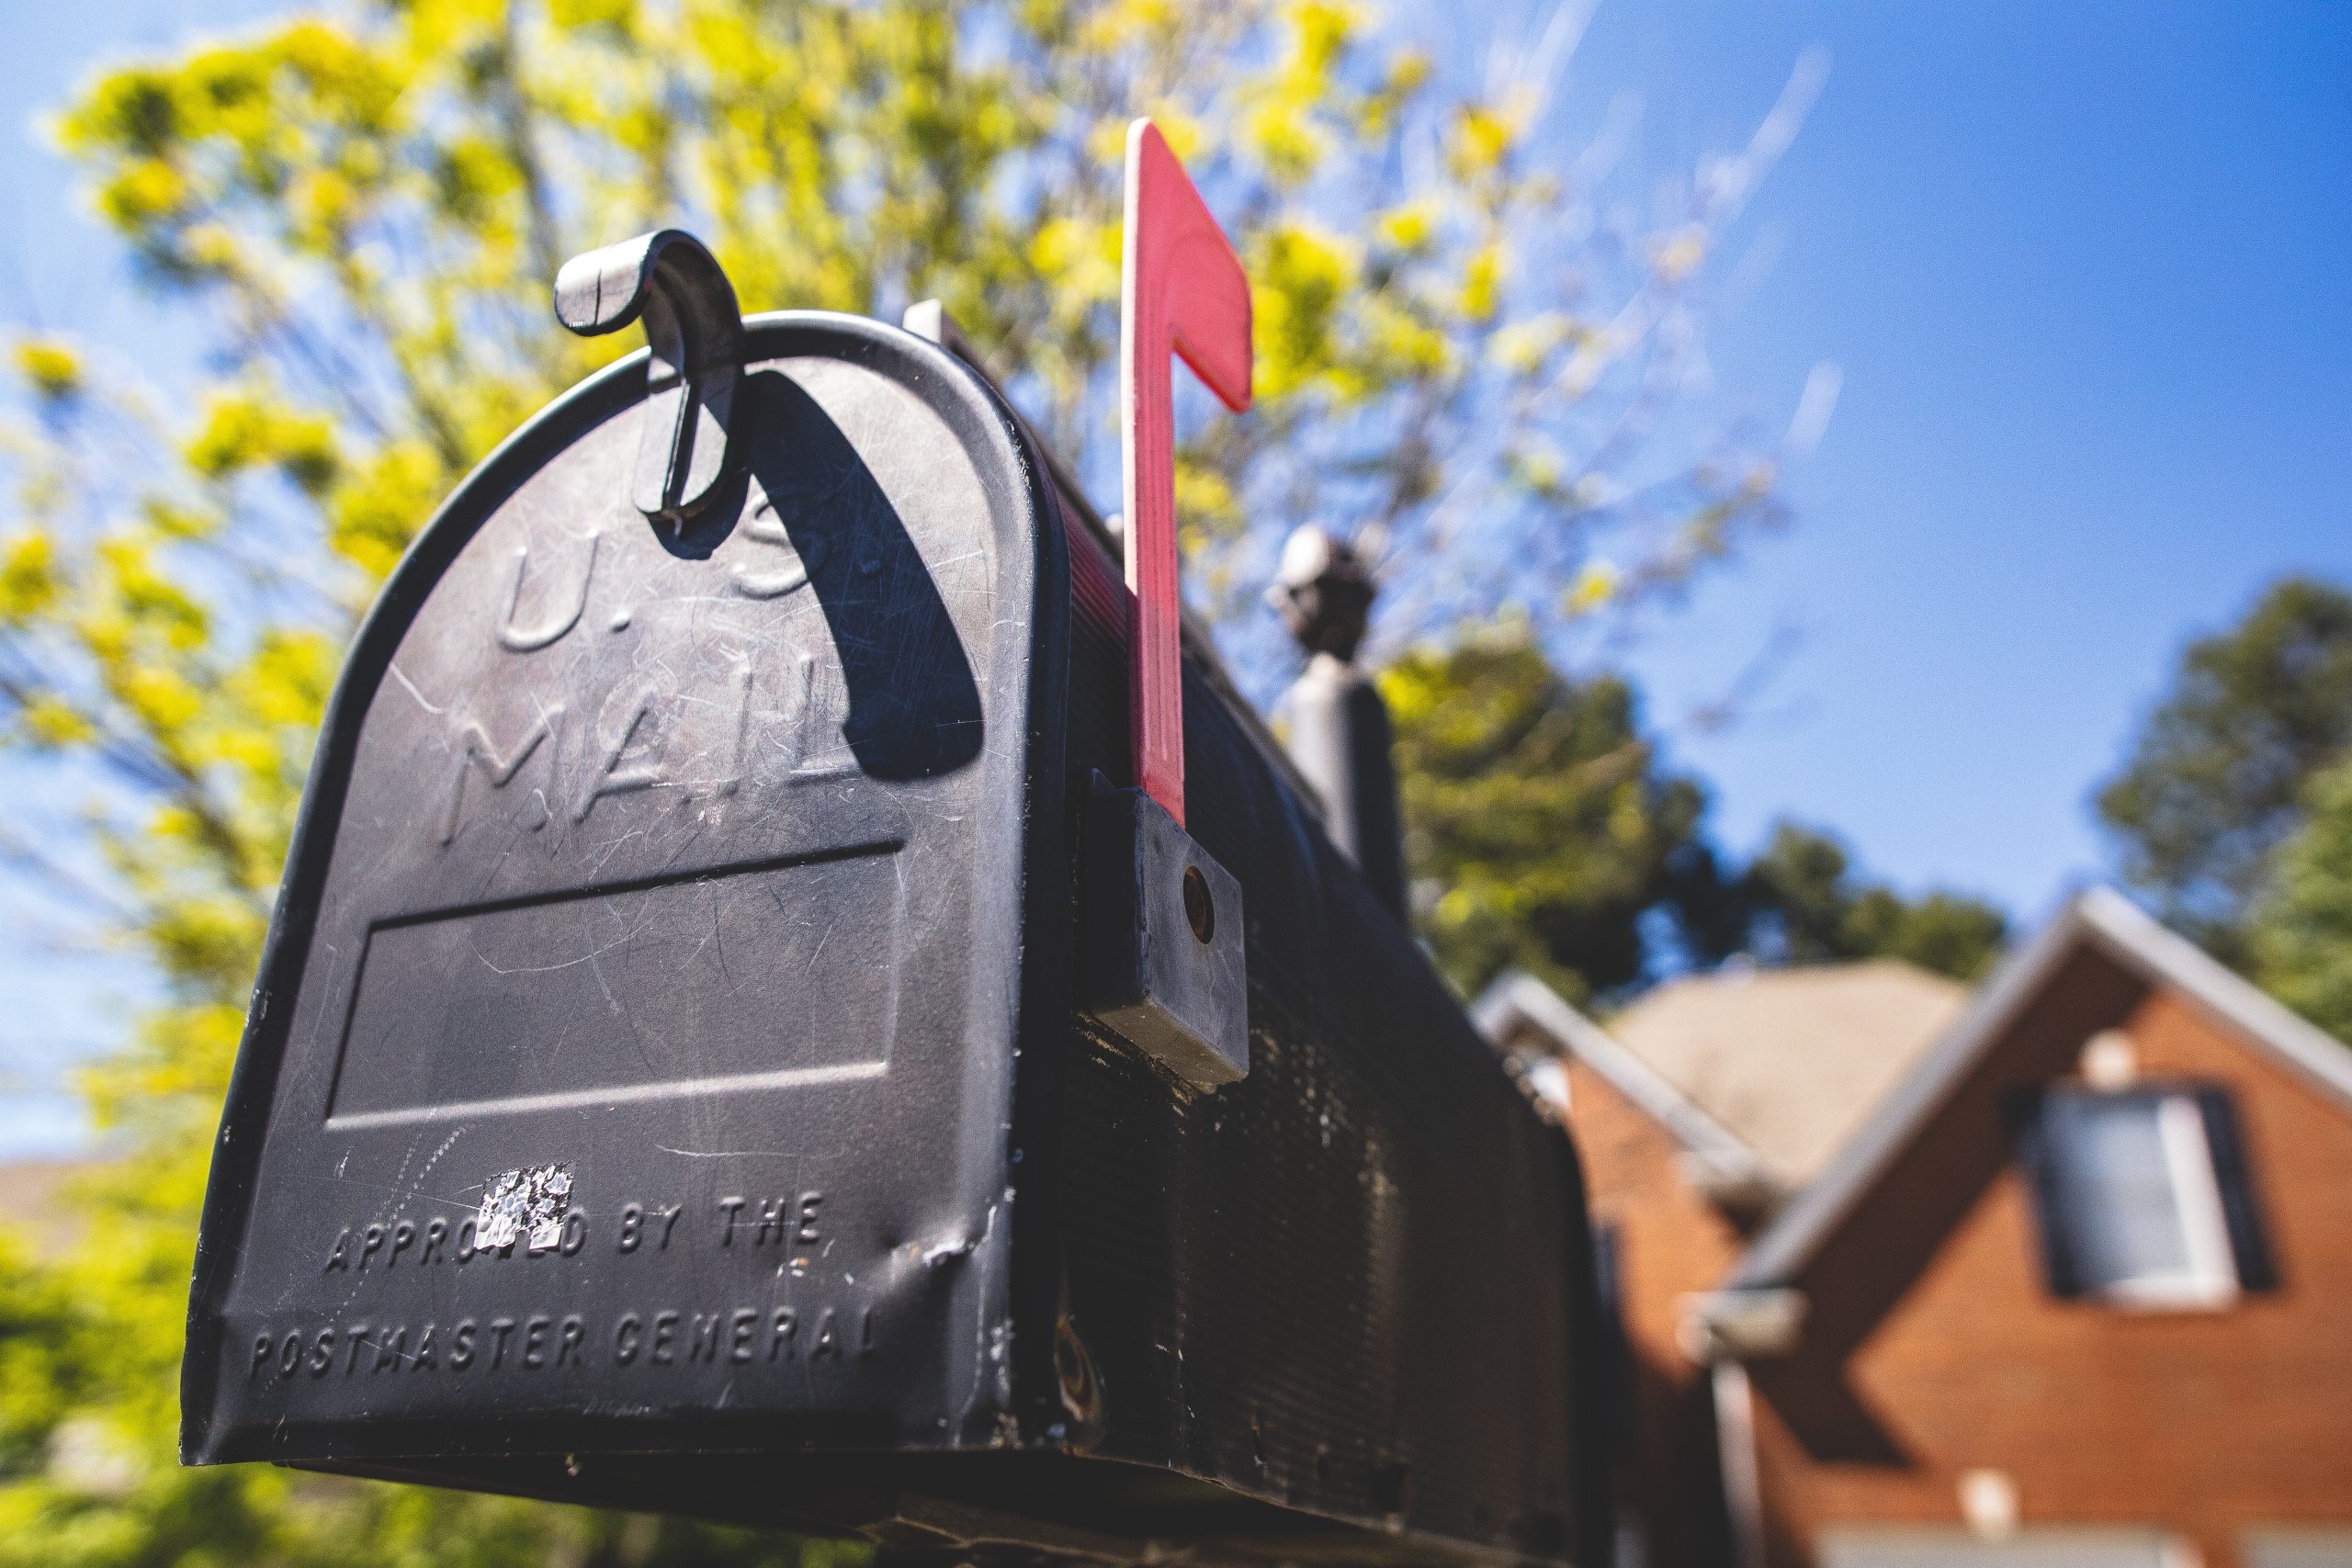 Miniserie 3:5- Minder stress van je mailbox? Gebruik het buddysysteem